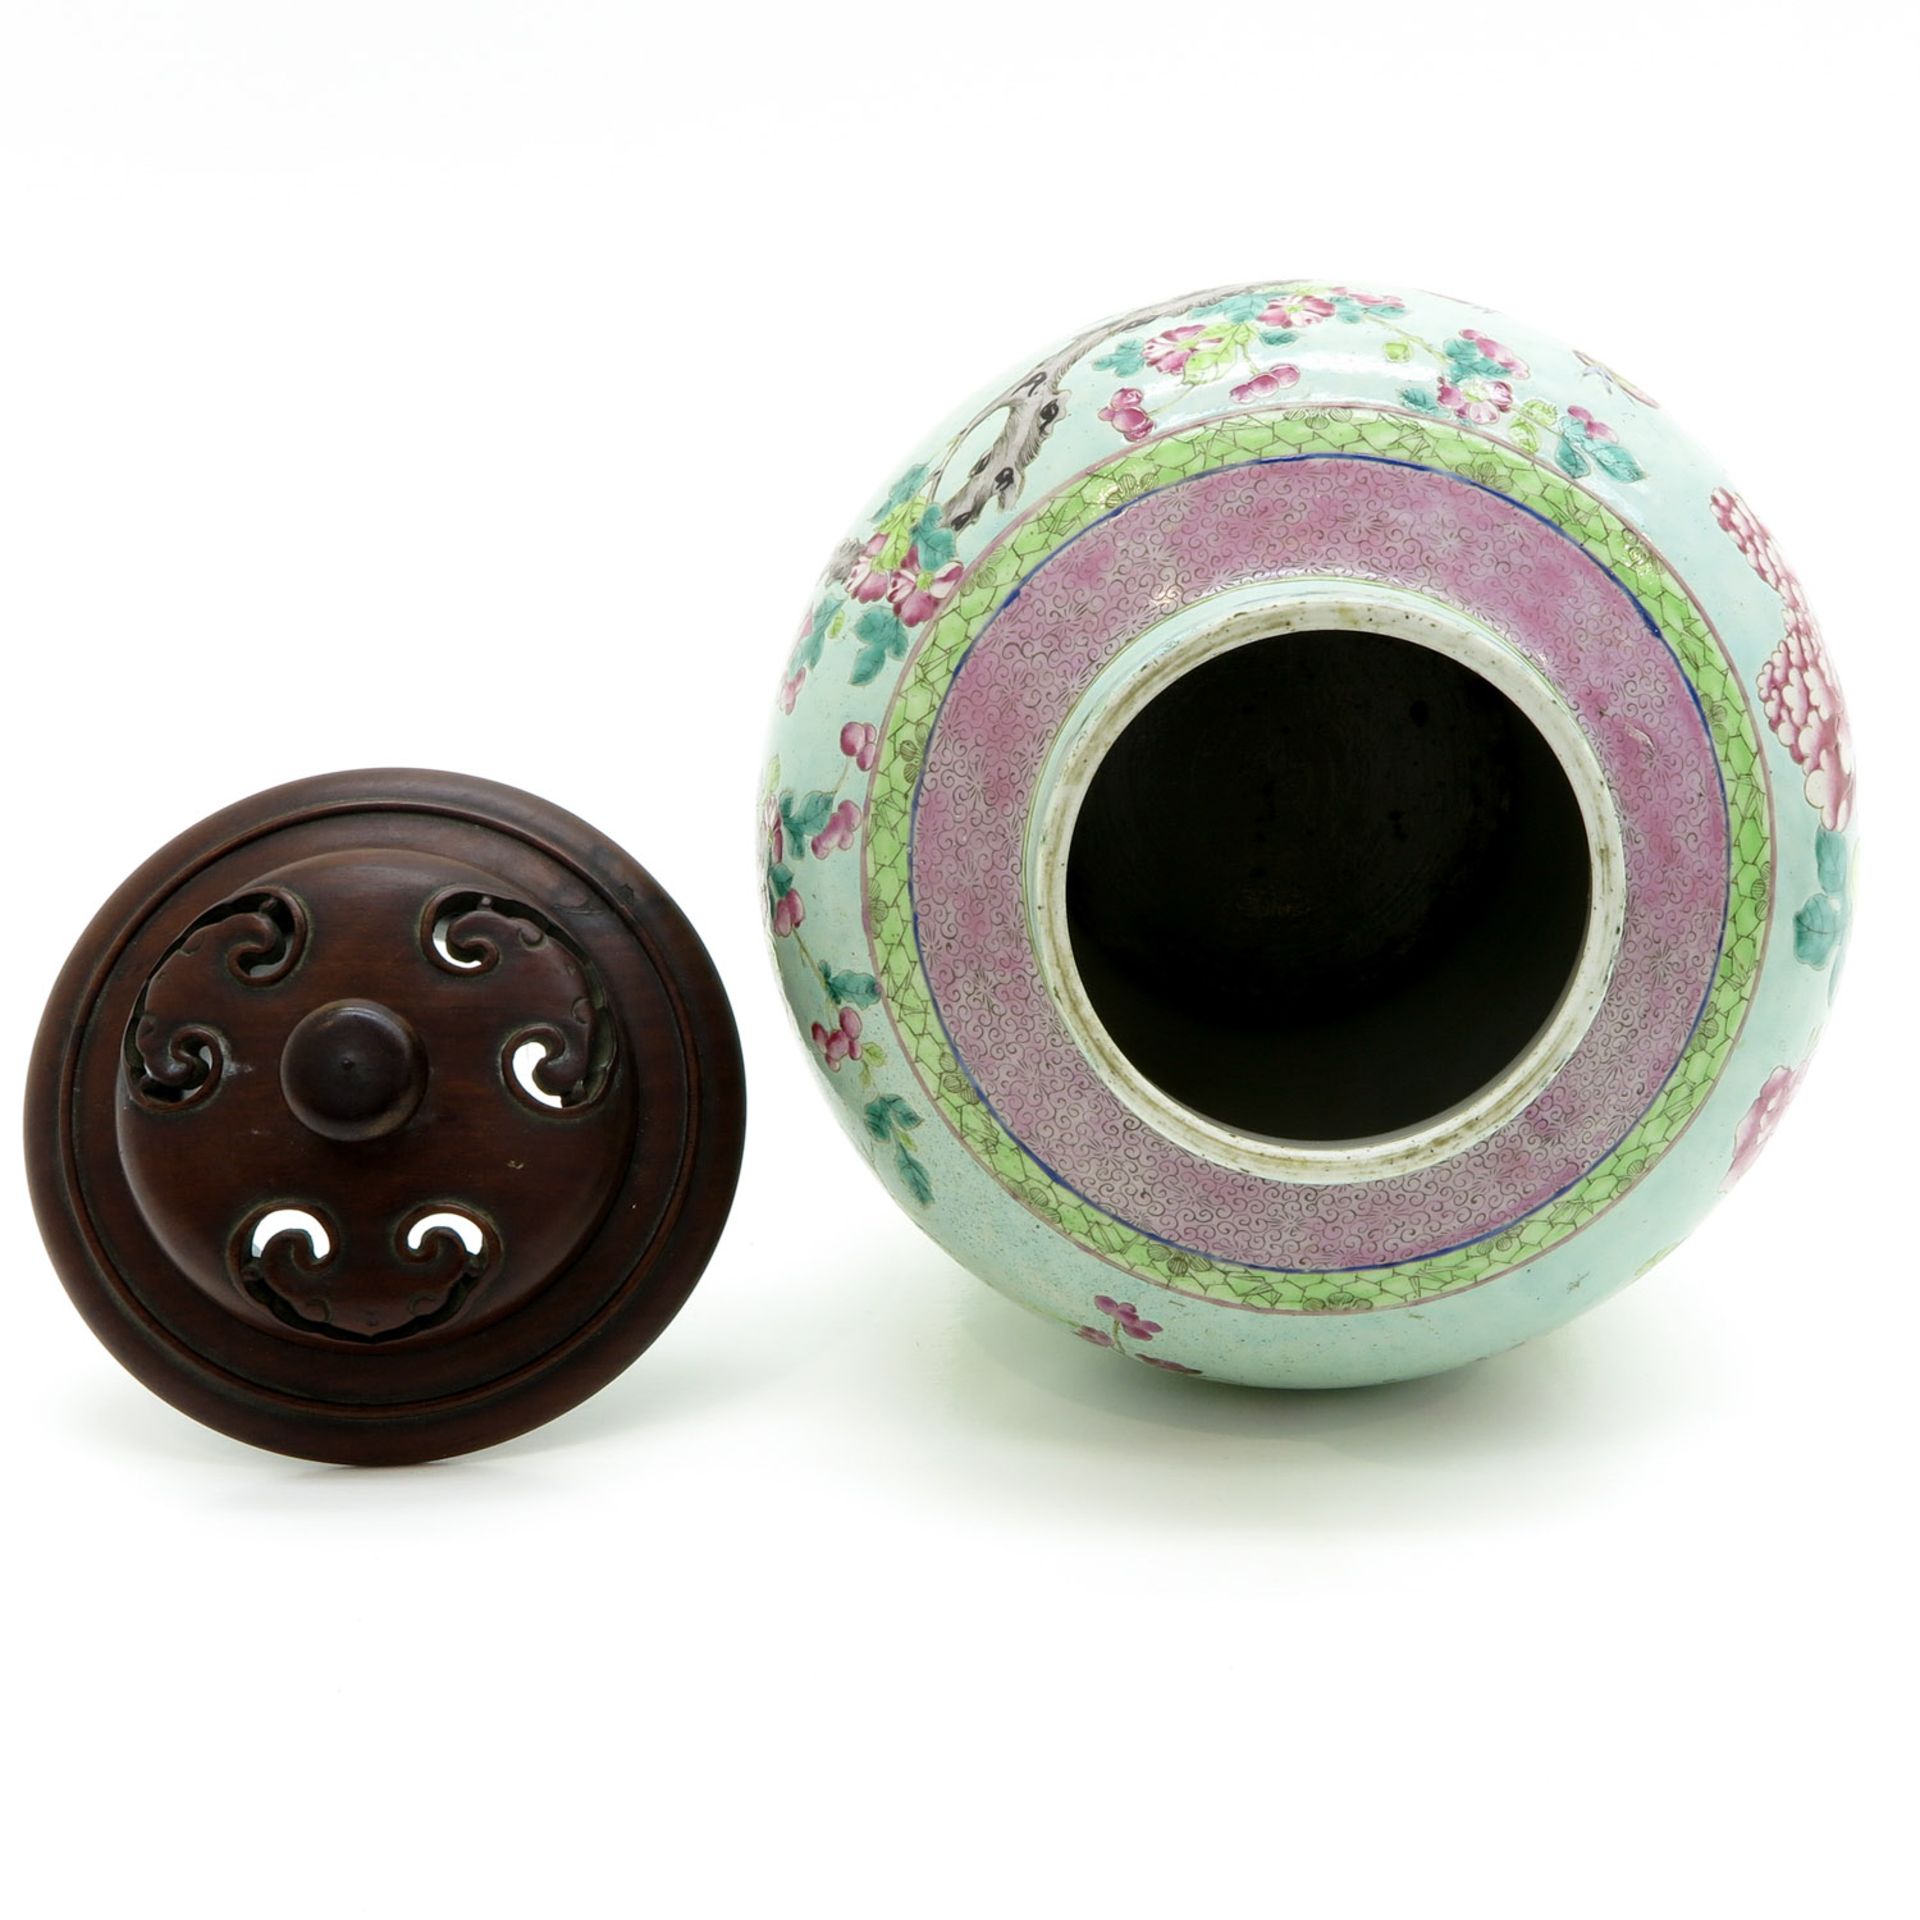 China Porcelain Lidded Vase - Image 5 of 6